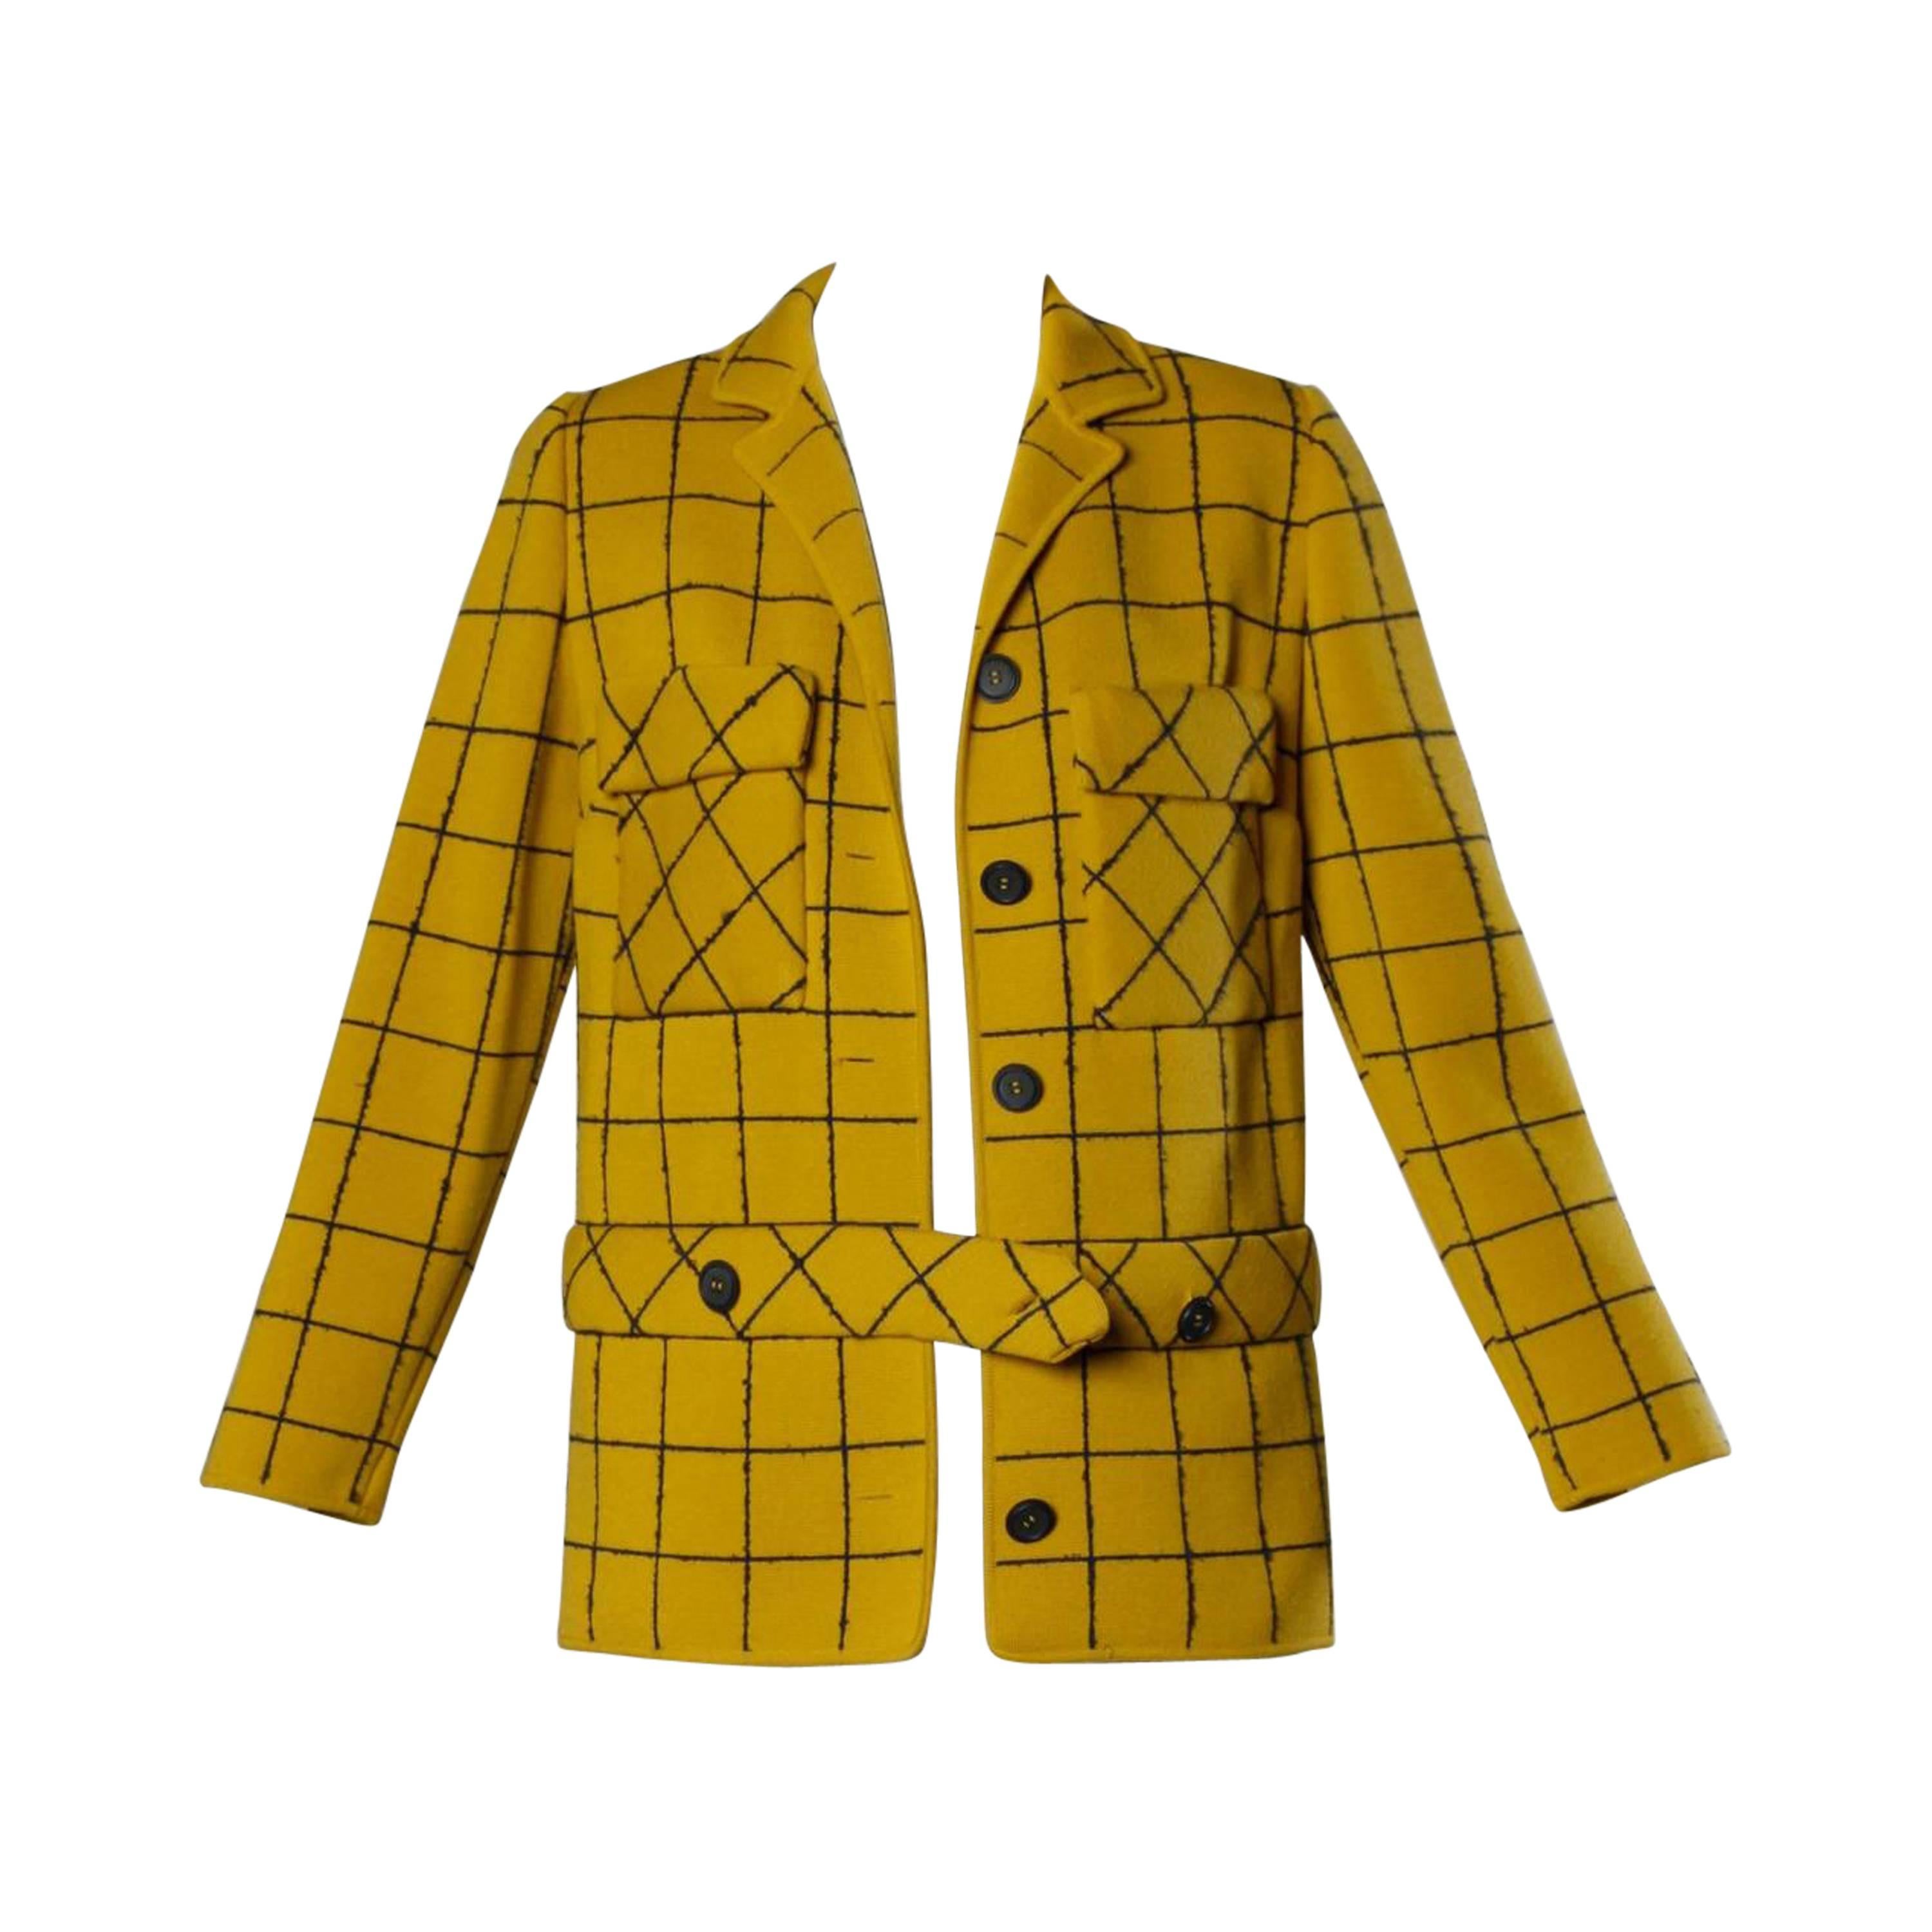 1960s Vintage Gino Paoli Mustard Yellow Italian Wool Knit Sweater Jacket